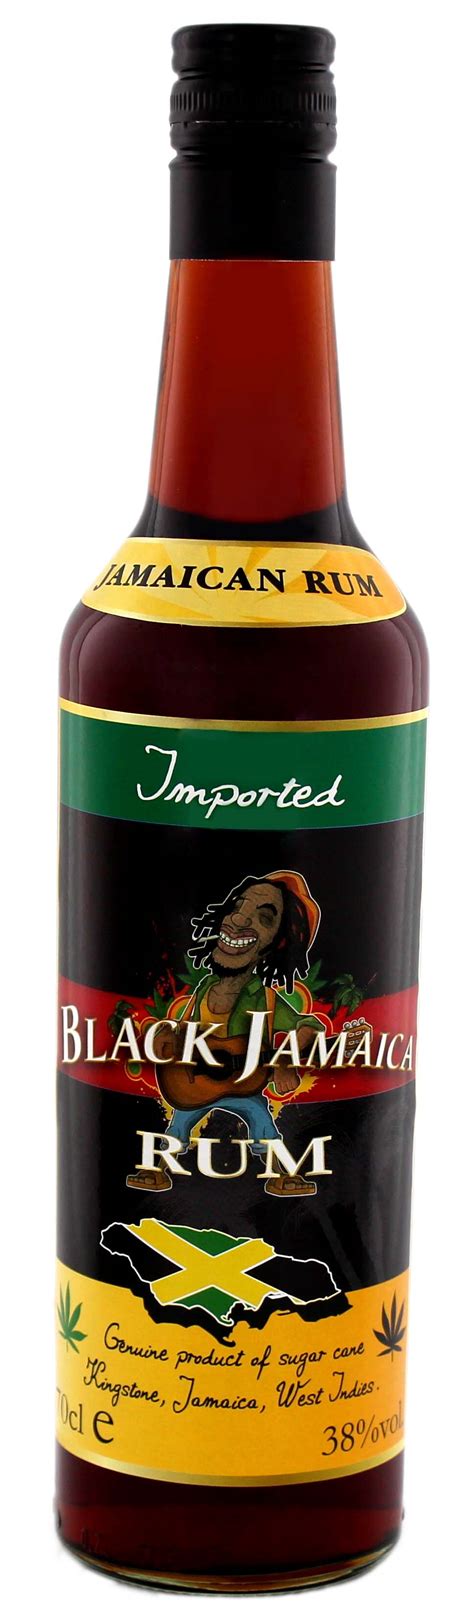 Appleton estate is authentic jamaican rum that seduces the senses and inspires the soul. Black Jamaica Rum jetzt kaufen im Drinkology Online Shop